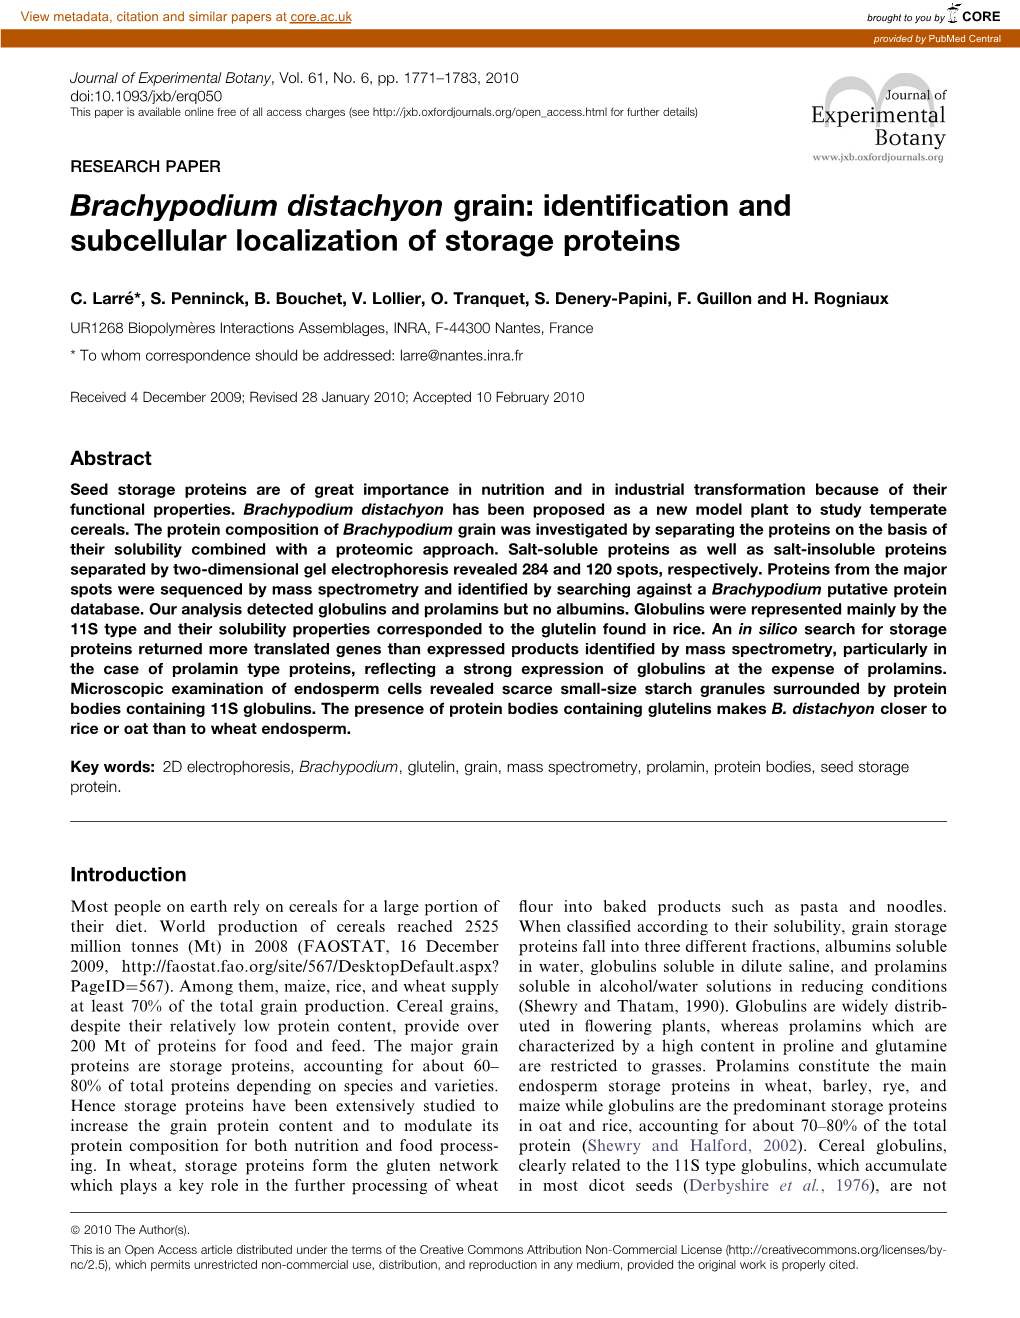 Brachypodium Distachyon Grain: Identification and Subcellular